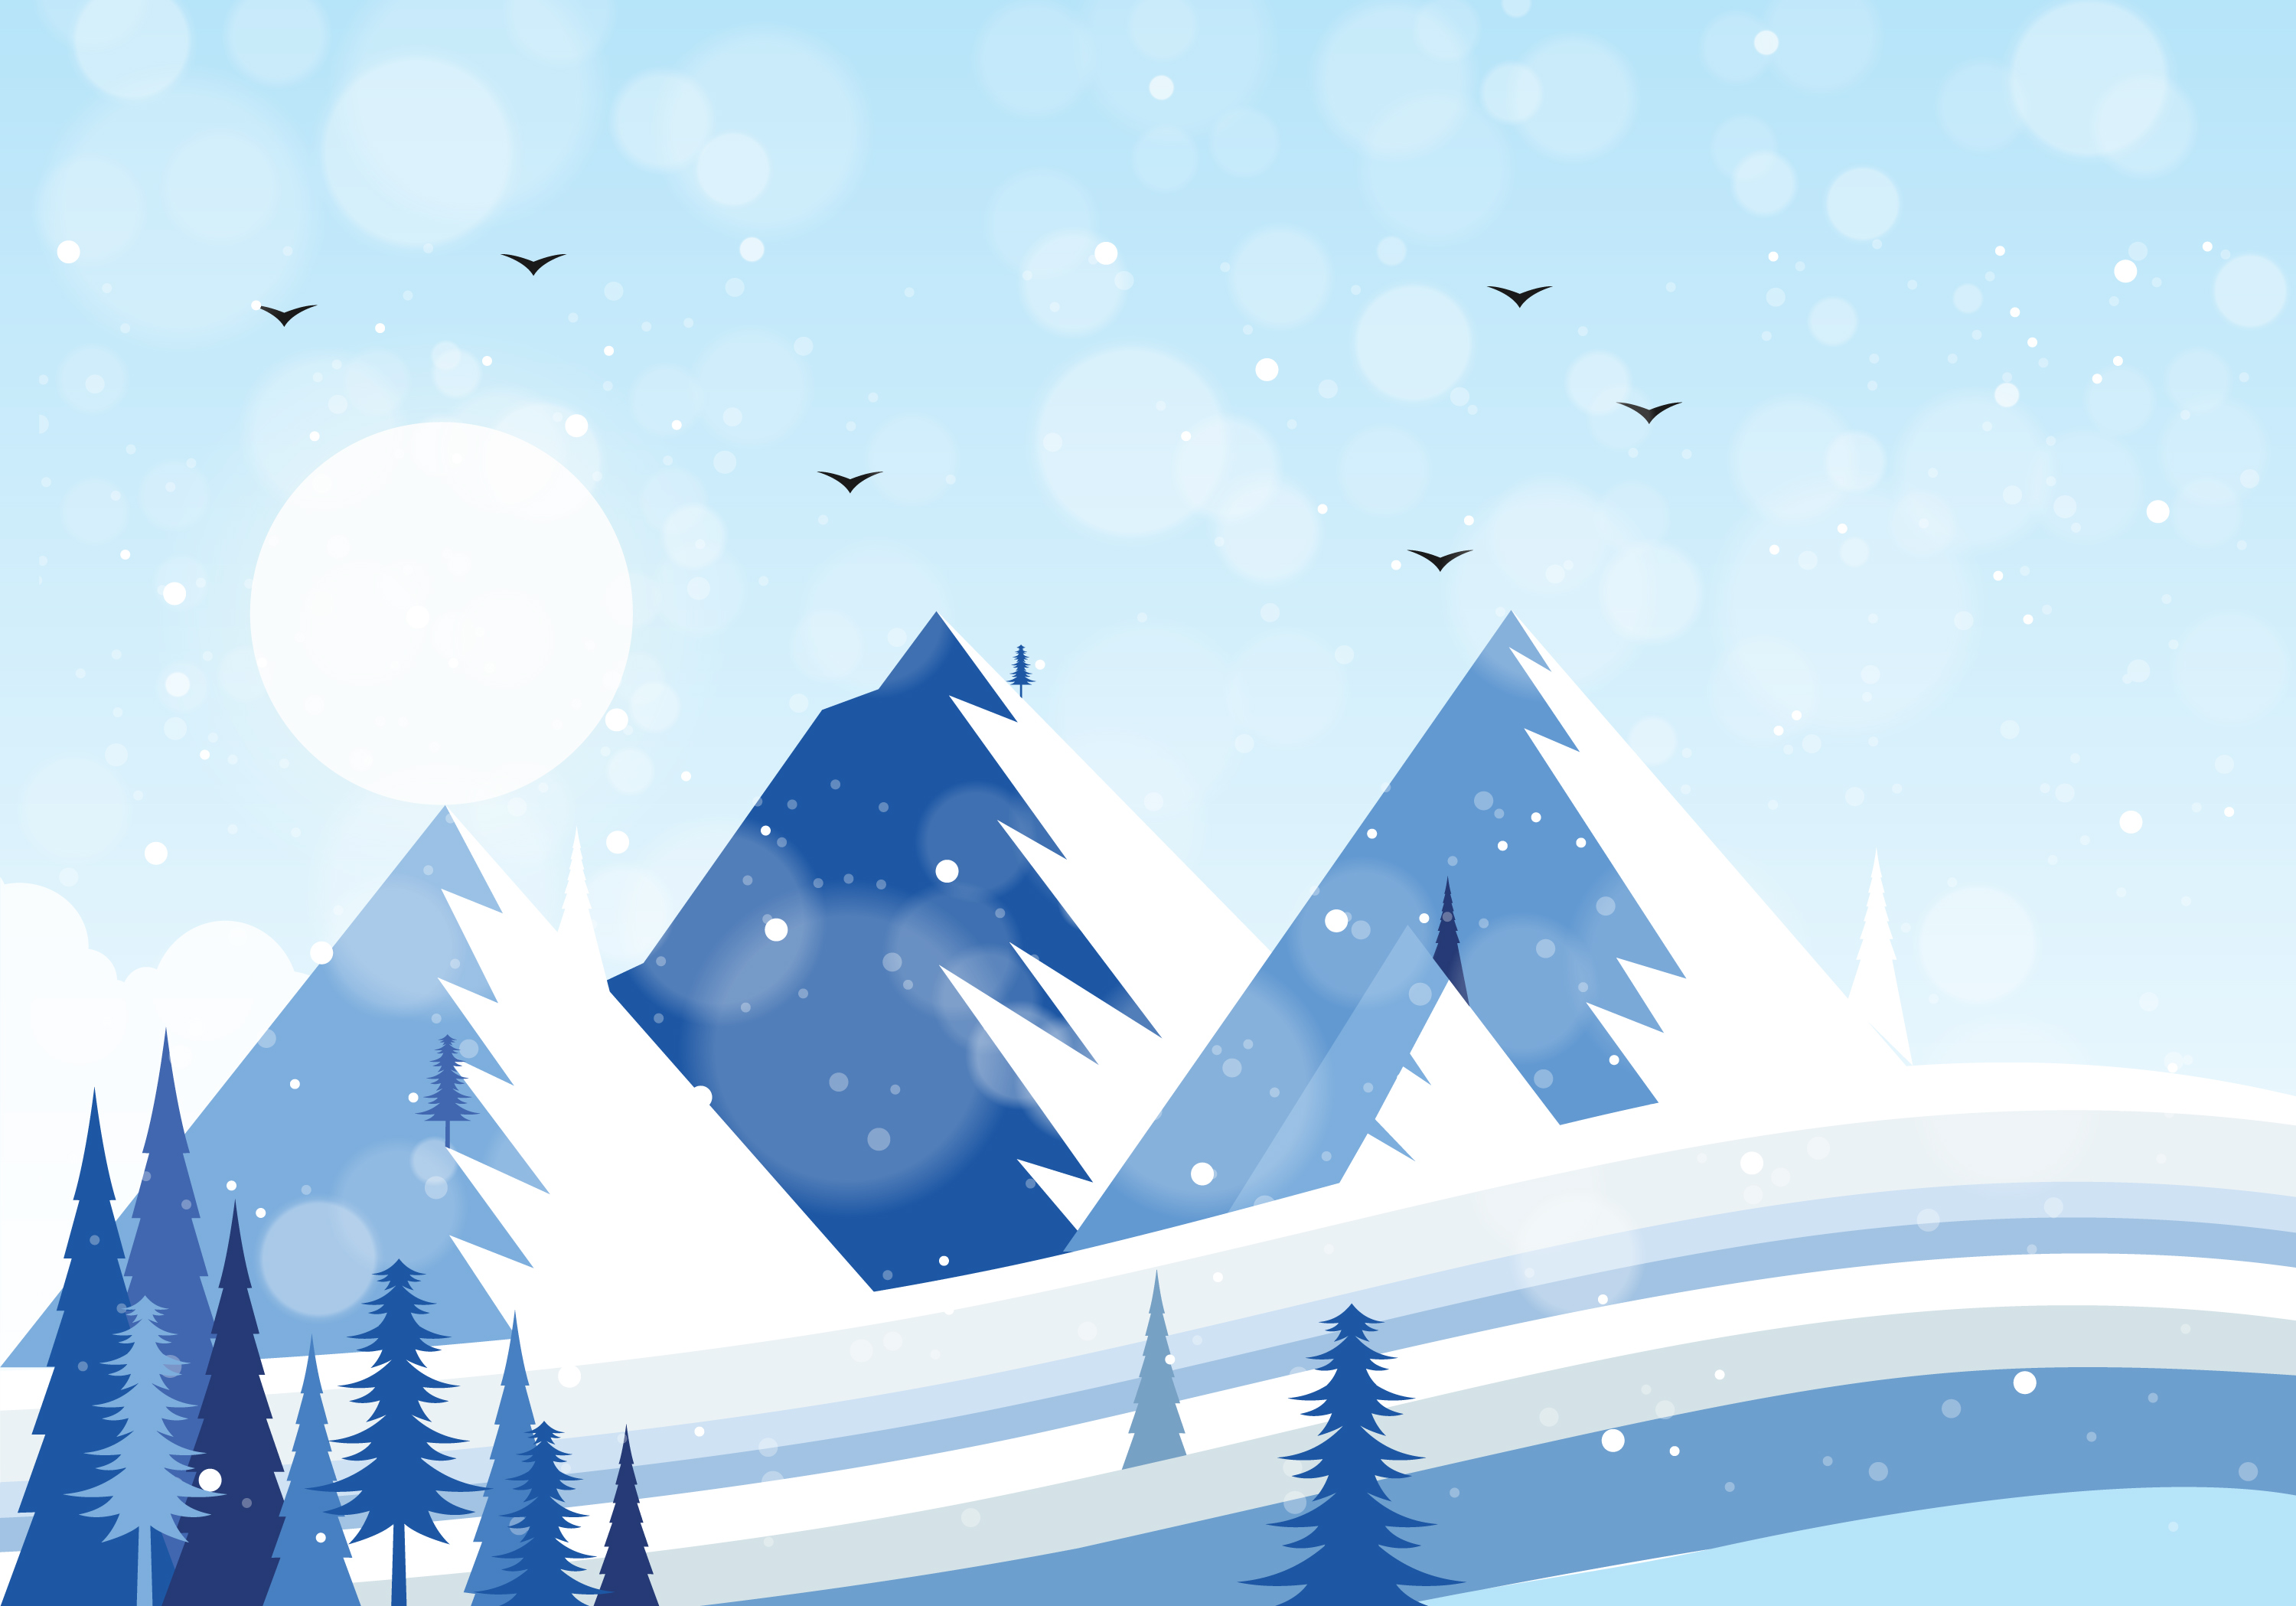 Download Vector Winter Landscape illustration 265571 - Download Free Vectors, Clipart Graphics & Vector Art